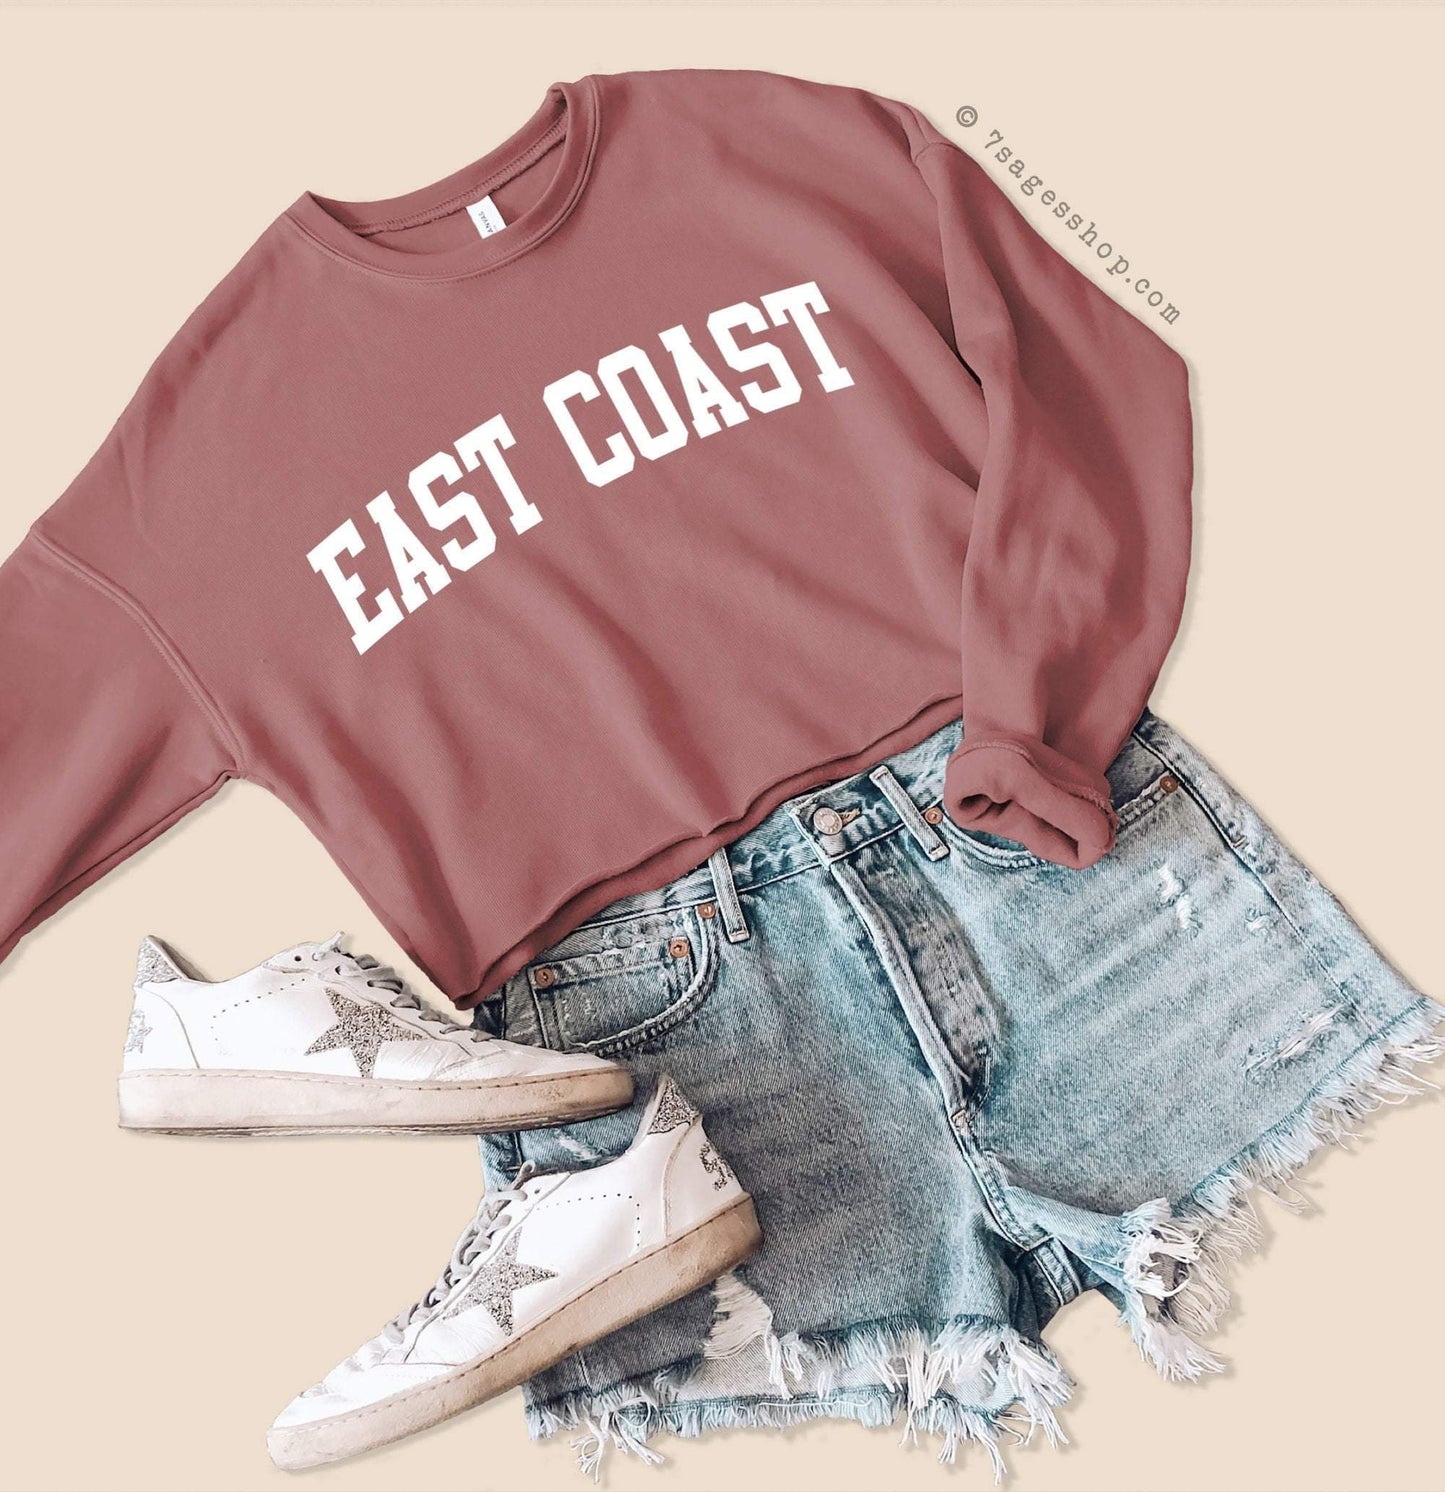 East Coast Sweatshirt - East Coast Cropped Sweatshirt - East Coast Shirts - Fleece Sweater - Cropped Sweater